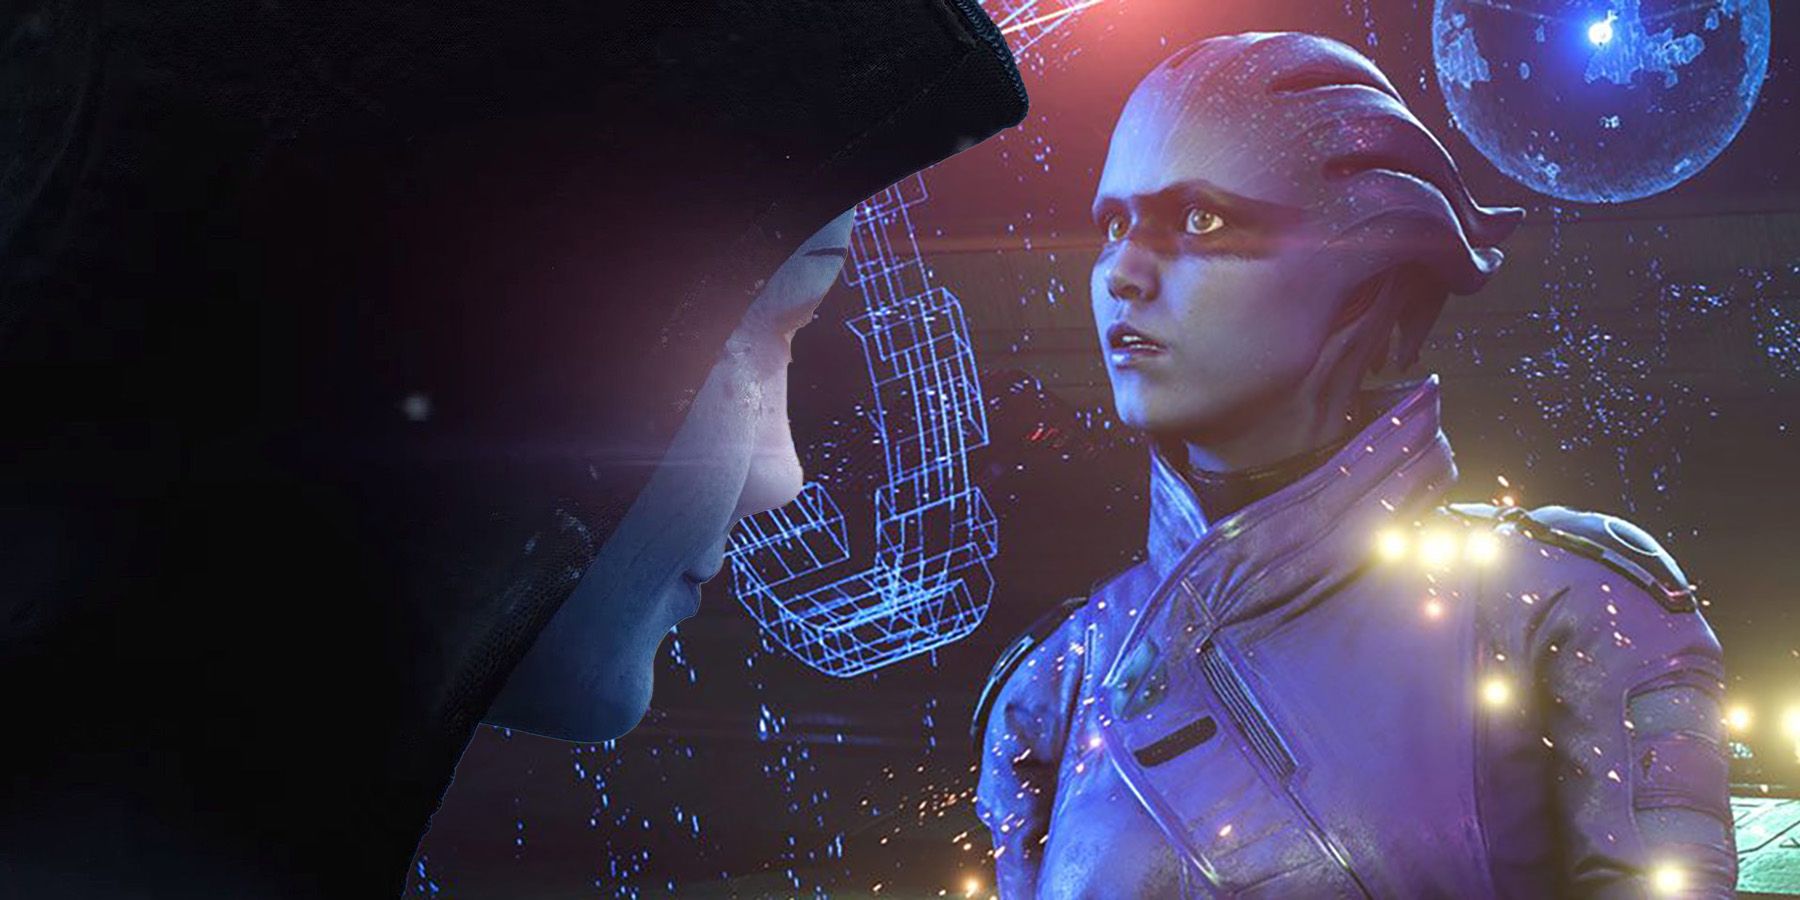 Mass-Effect andromeda 4